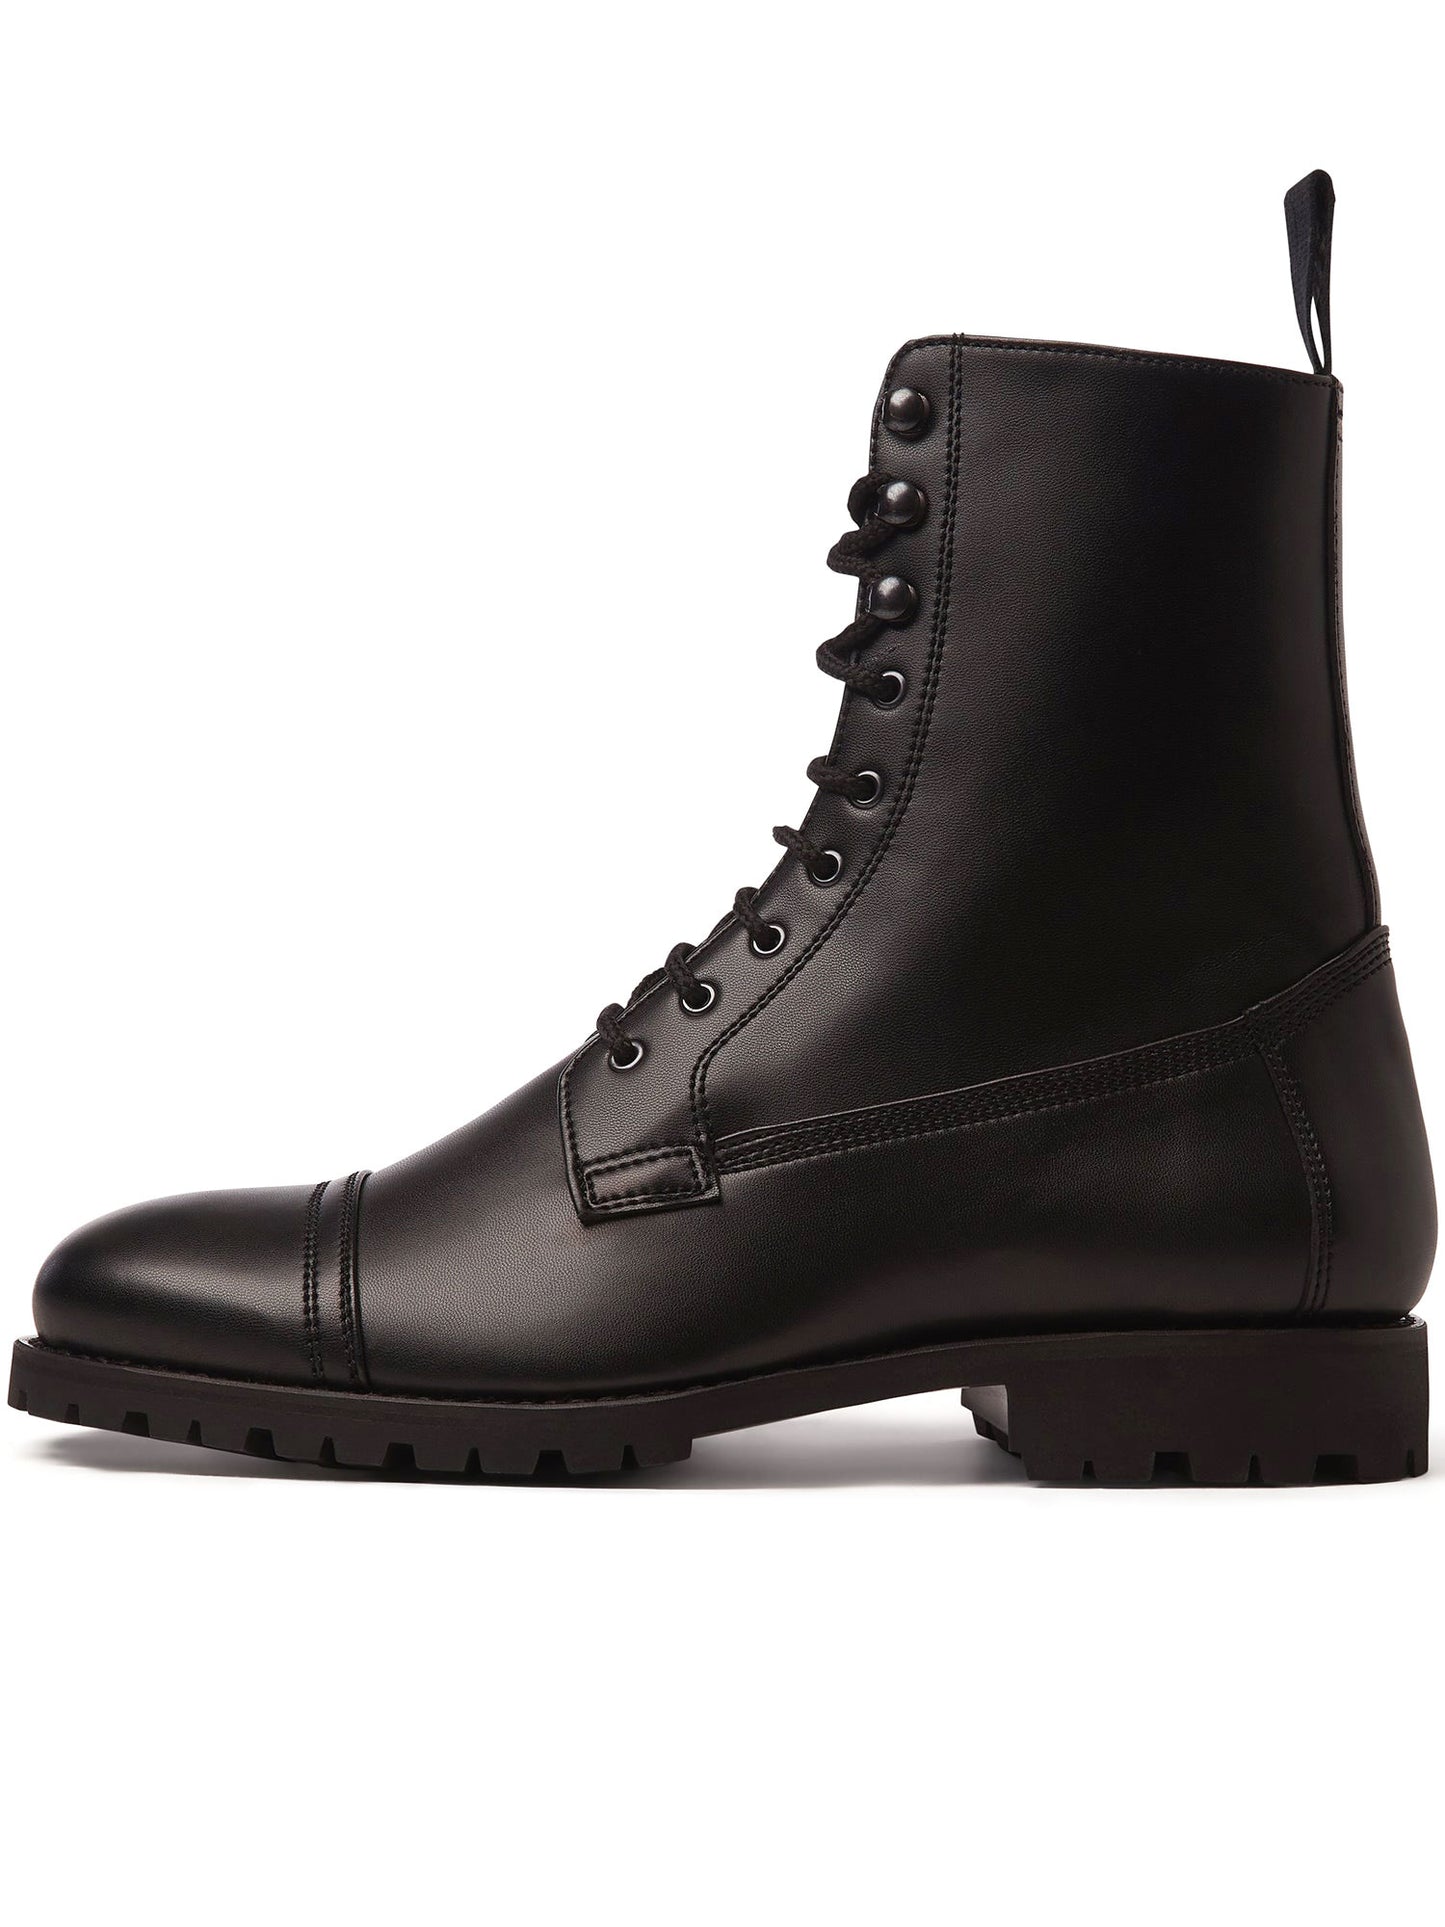 Goodyear Welt Tactical Boots